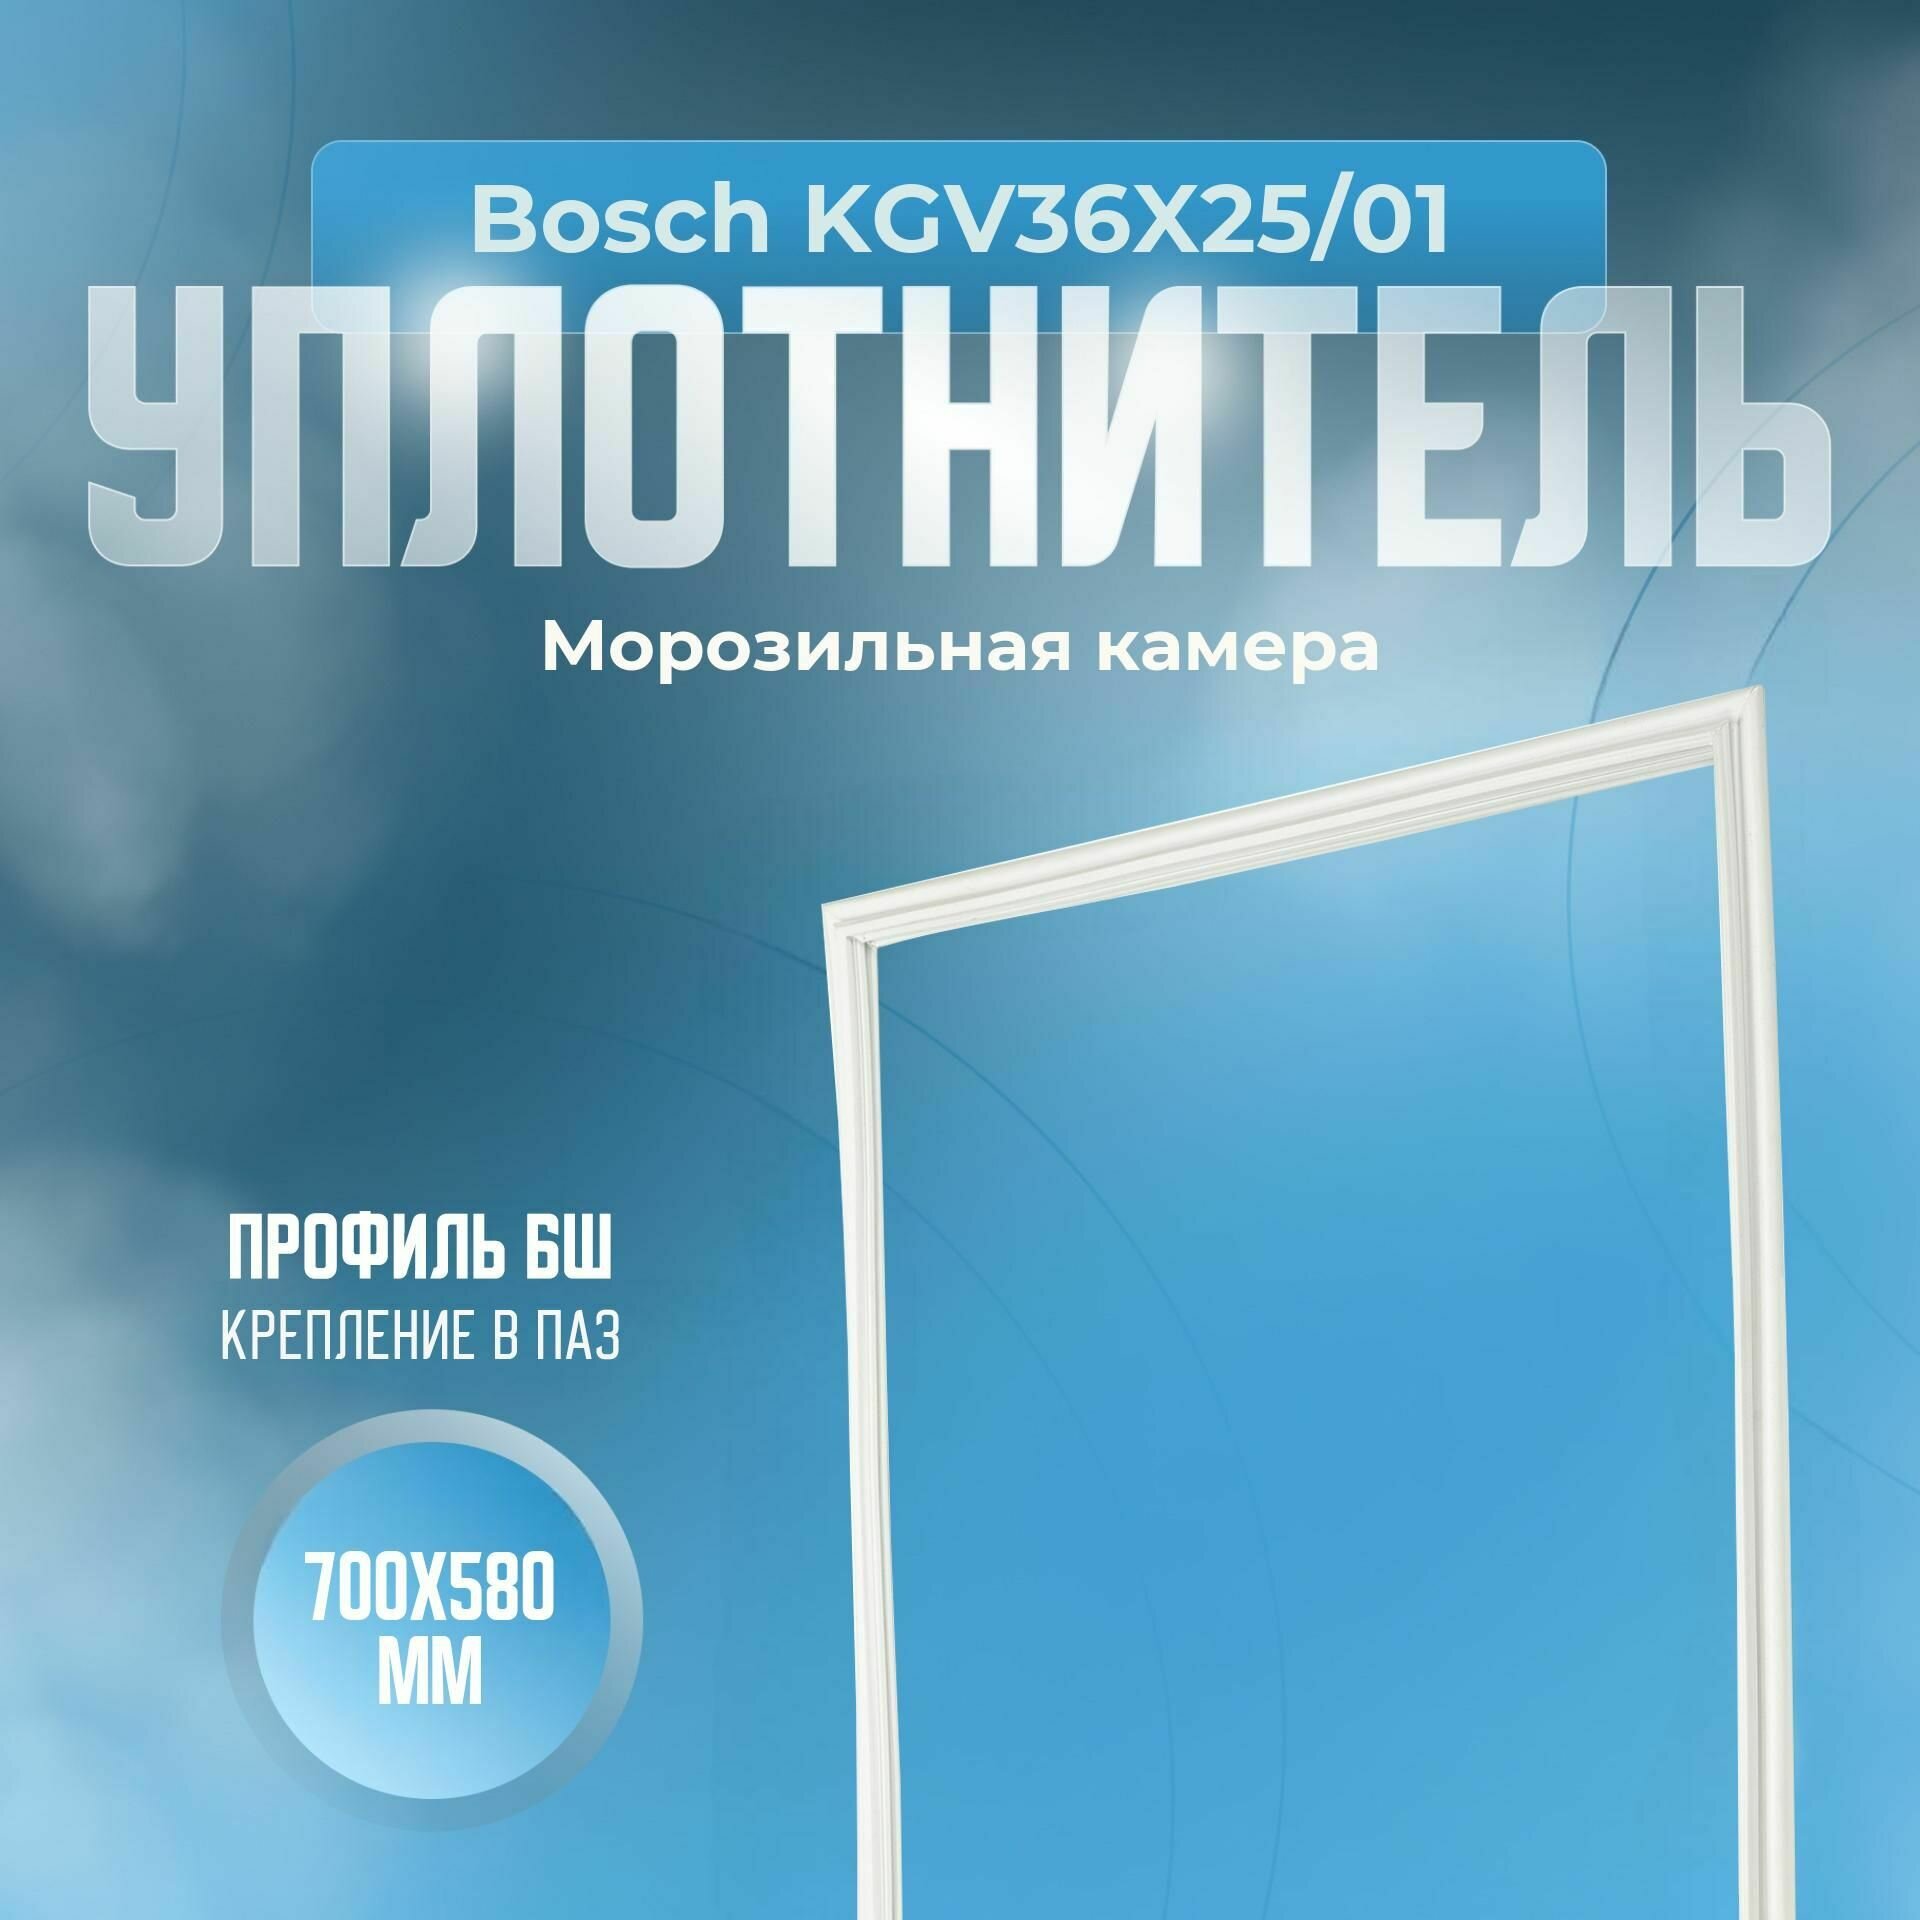 Уплотнитель Bosch KGV36X25/01. м. к, Размер - 700х580 мм. БШ